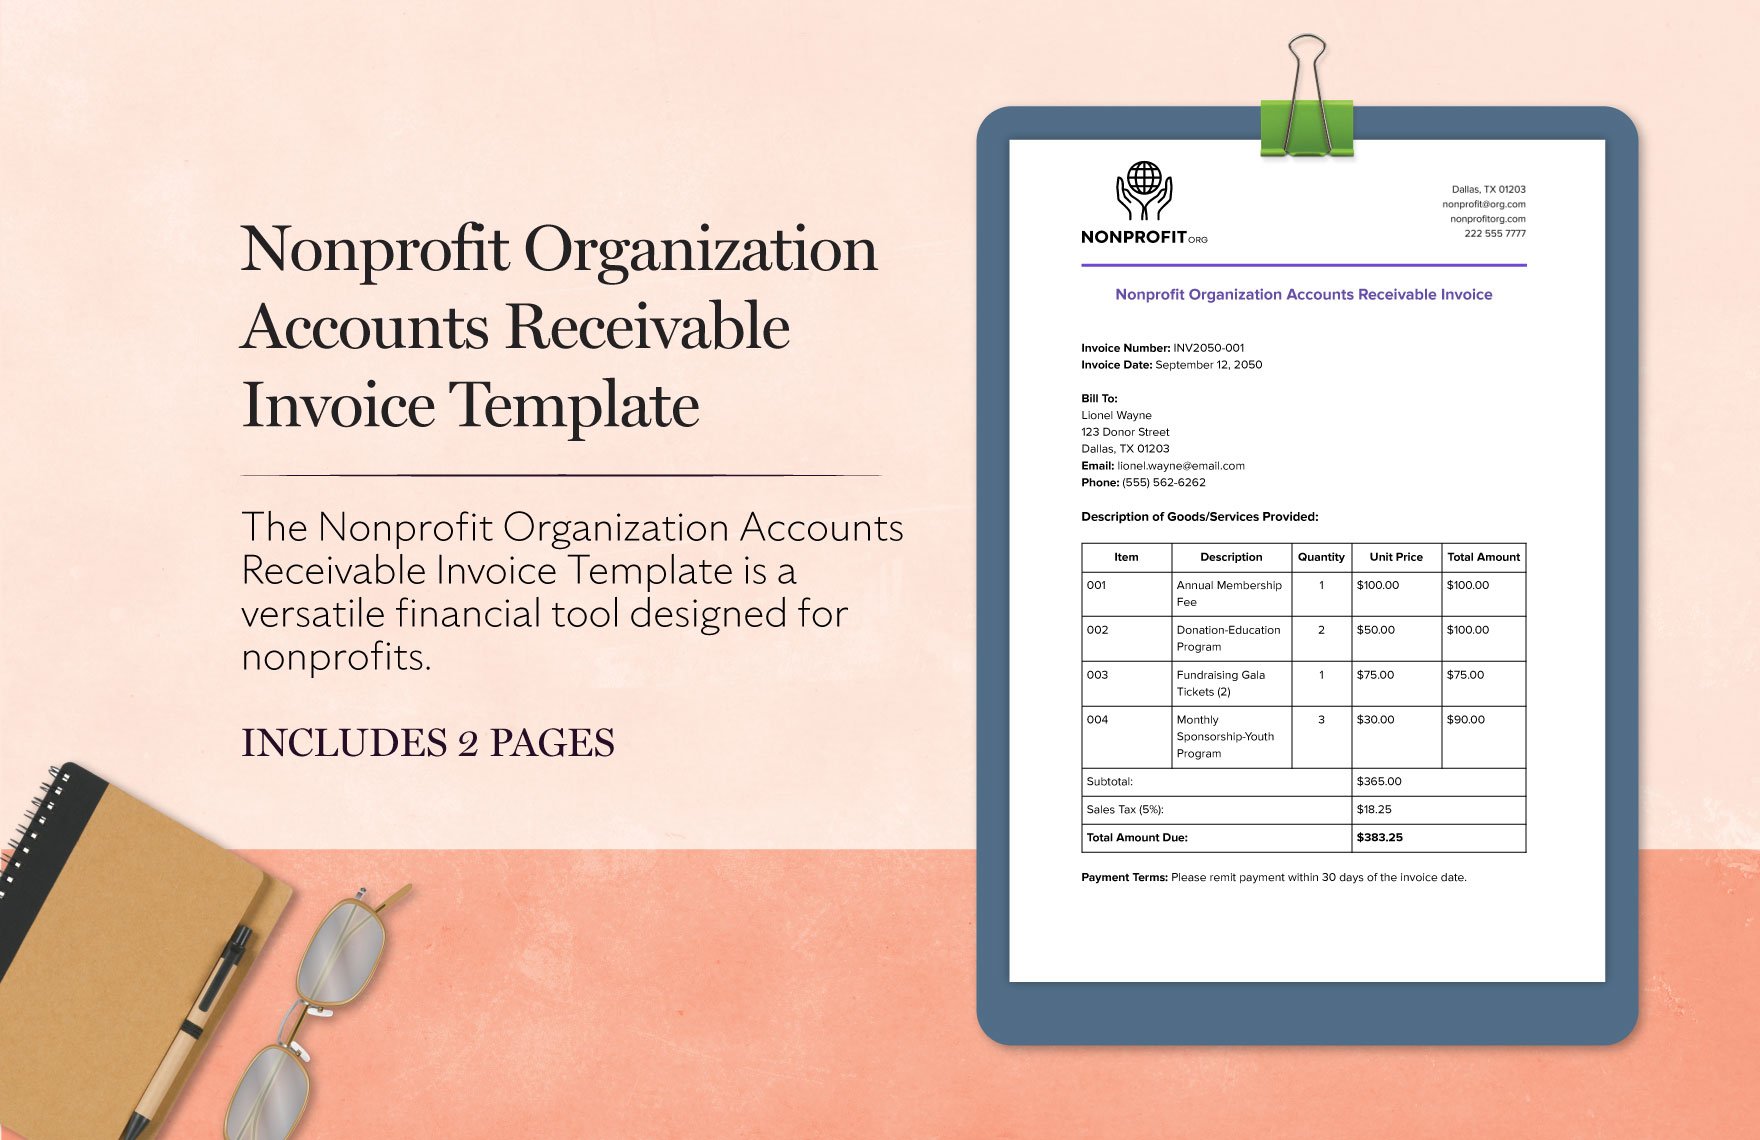 Nonprofit Organization Accounts Receivable Invoice Template in Word, Google Docs, PDF